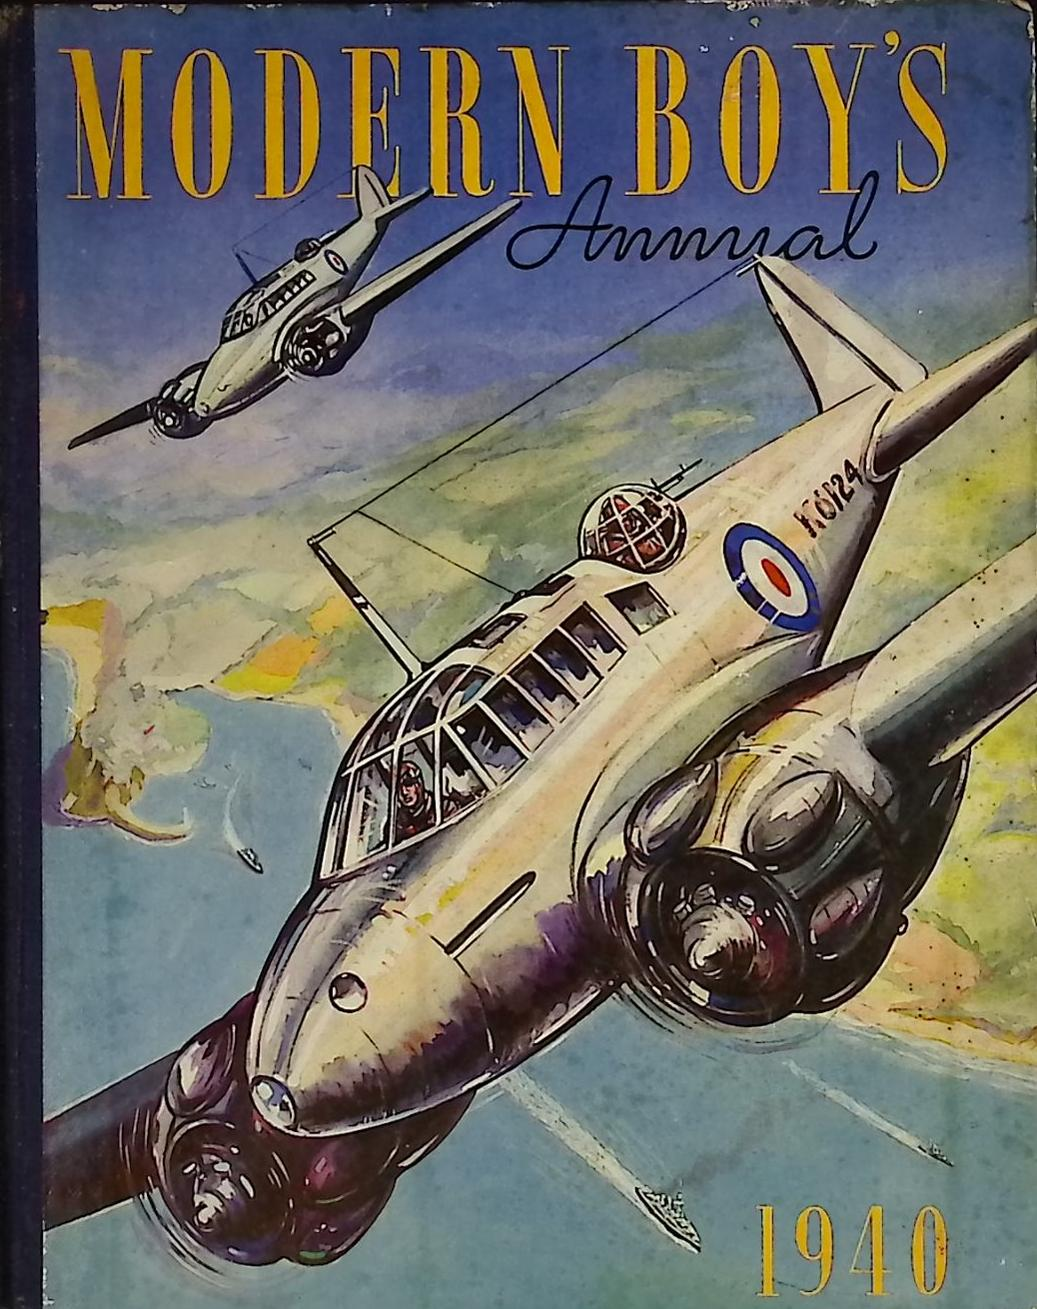 Modern Boy's Annual 1940 [Biggles]